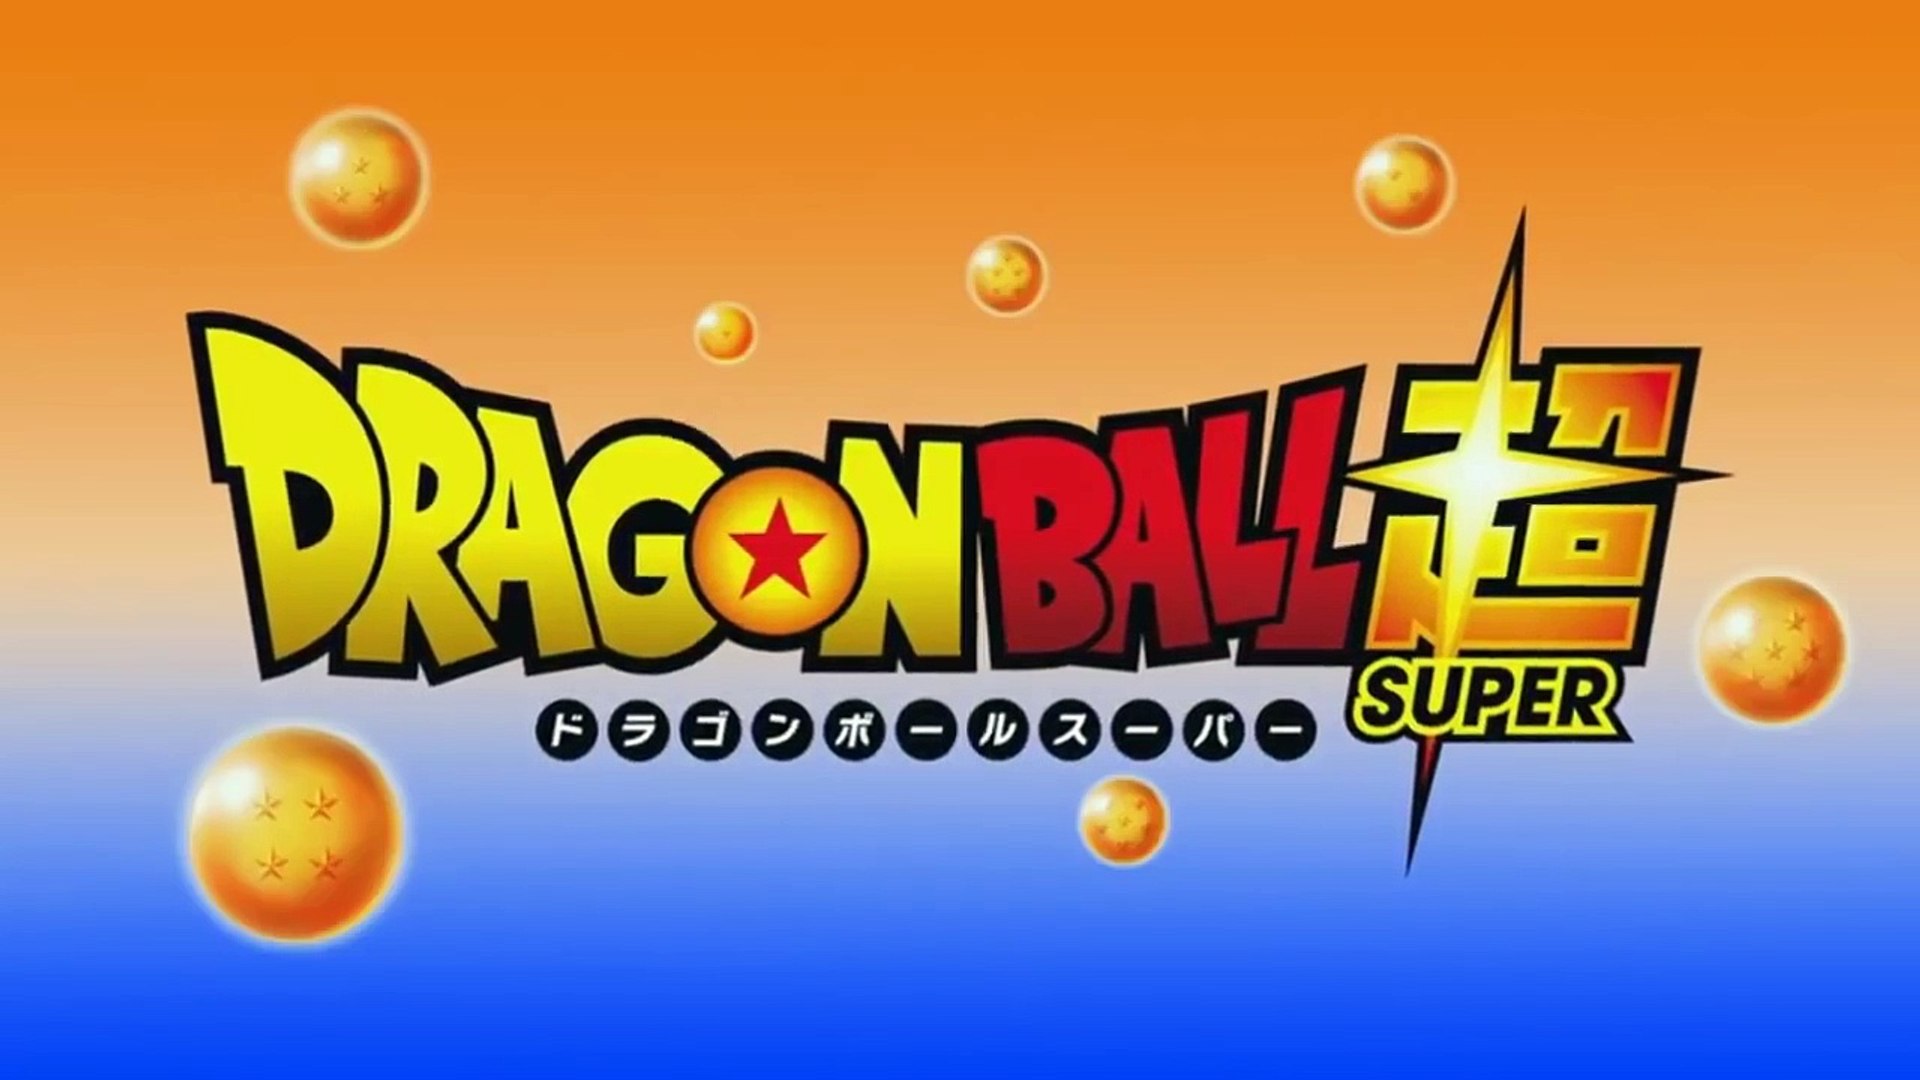 DUHRAGON BALL — Dragon Ball Super 126